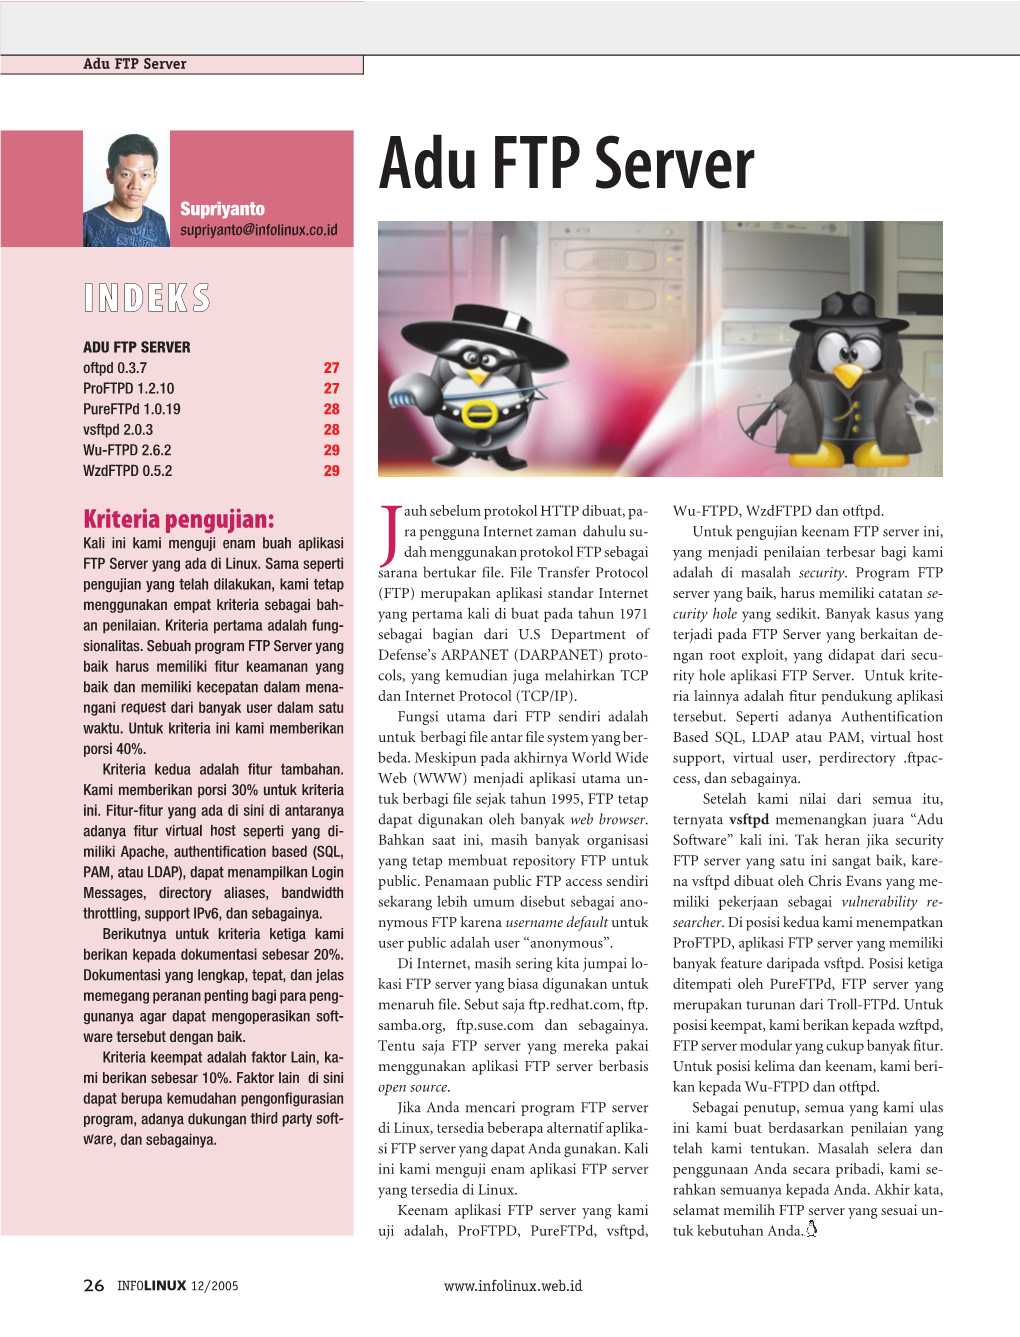 Adu FTP Server Adu FTP Server Supriyanto Supriyanto@Infolinux.Co.Id IINDENDEKKSS